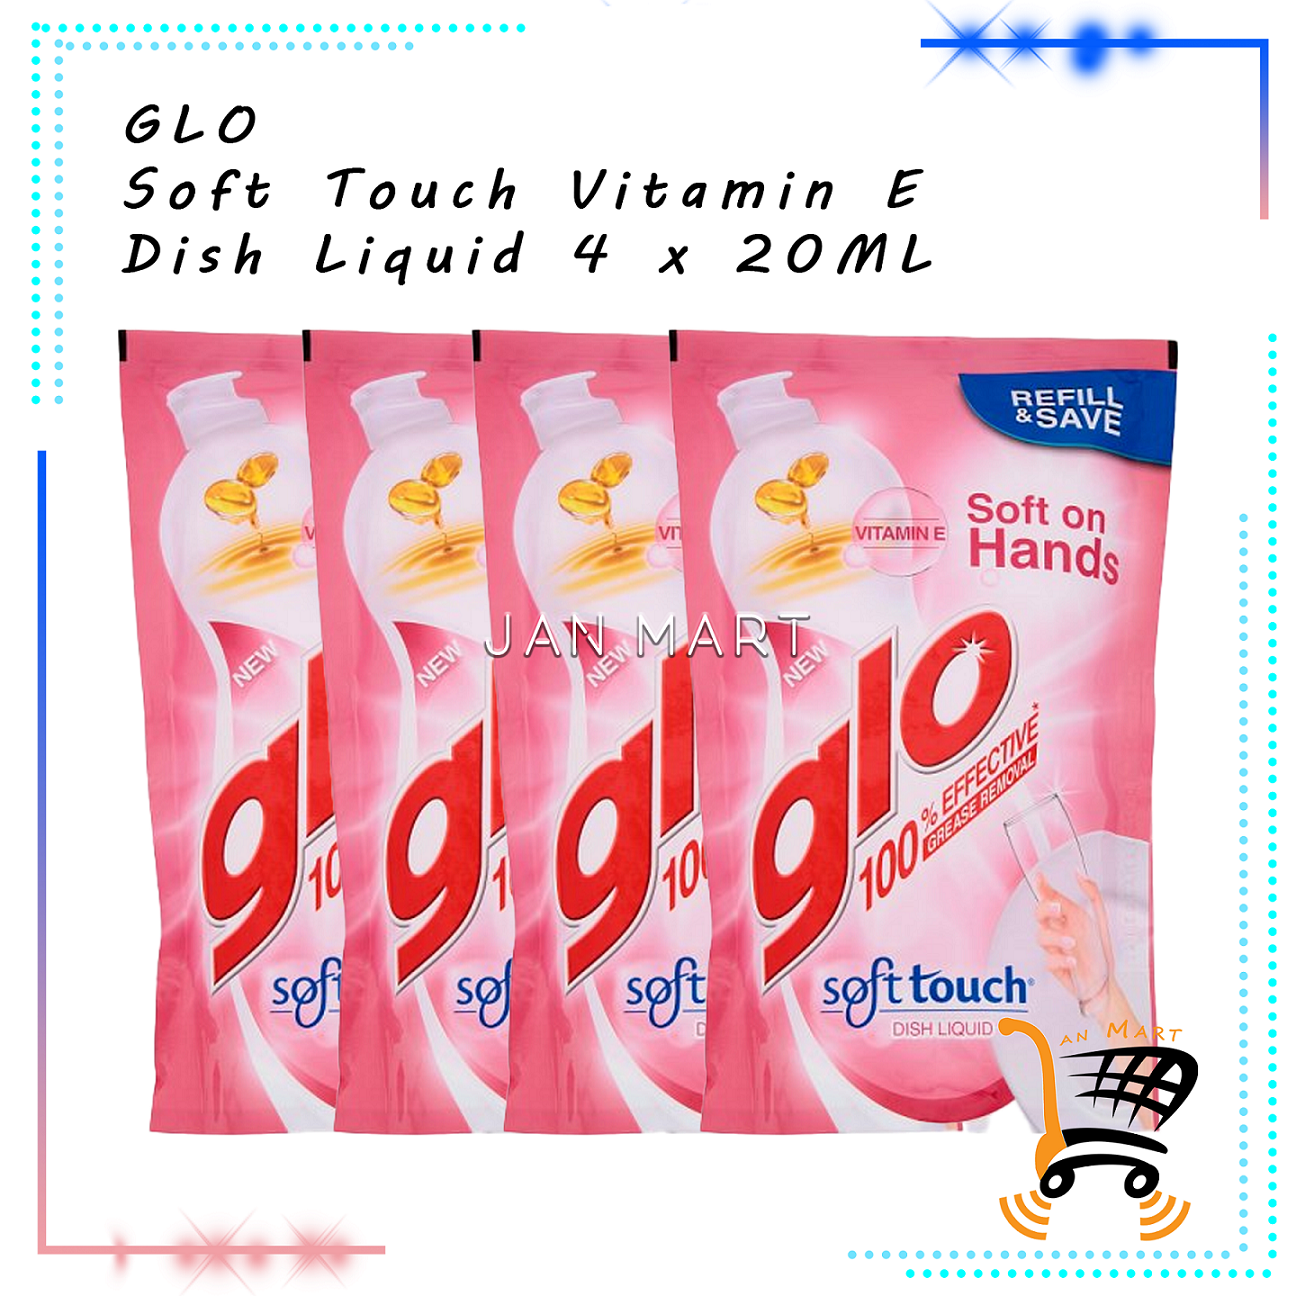 [GWP] GLO Soft Touch Vitamin E Dish Liquid 4 x 20ML